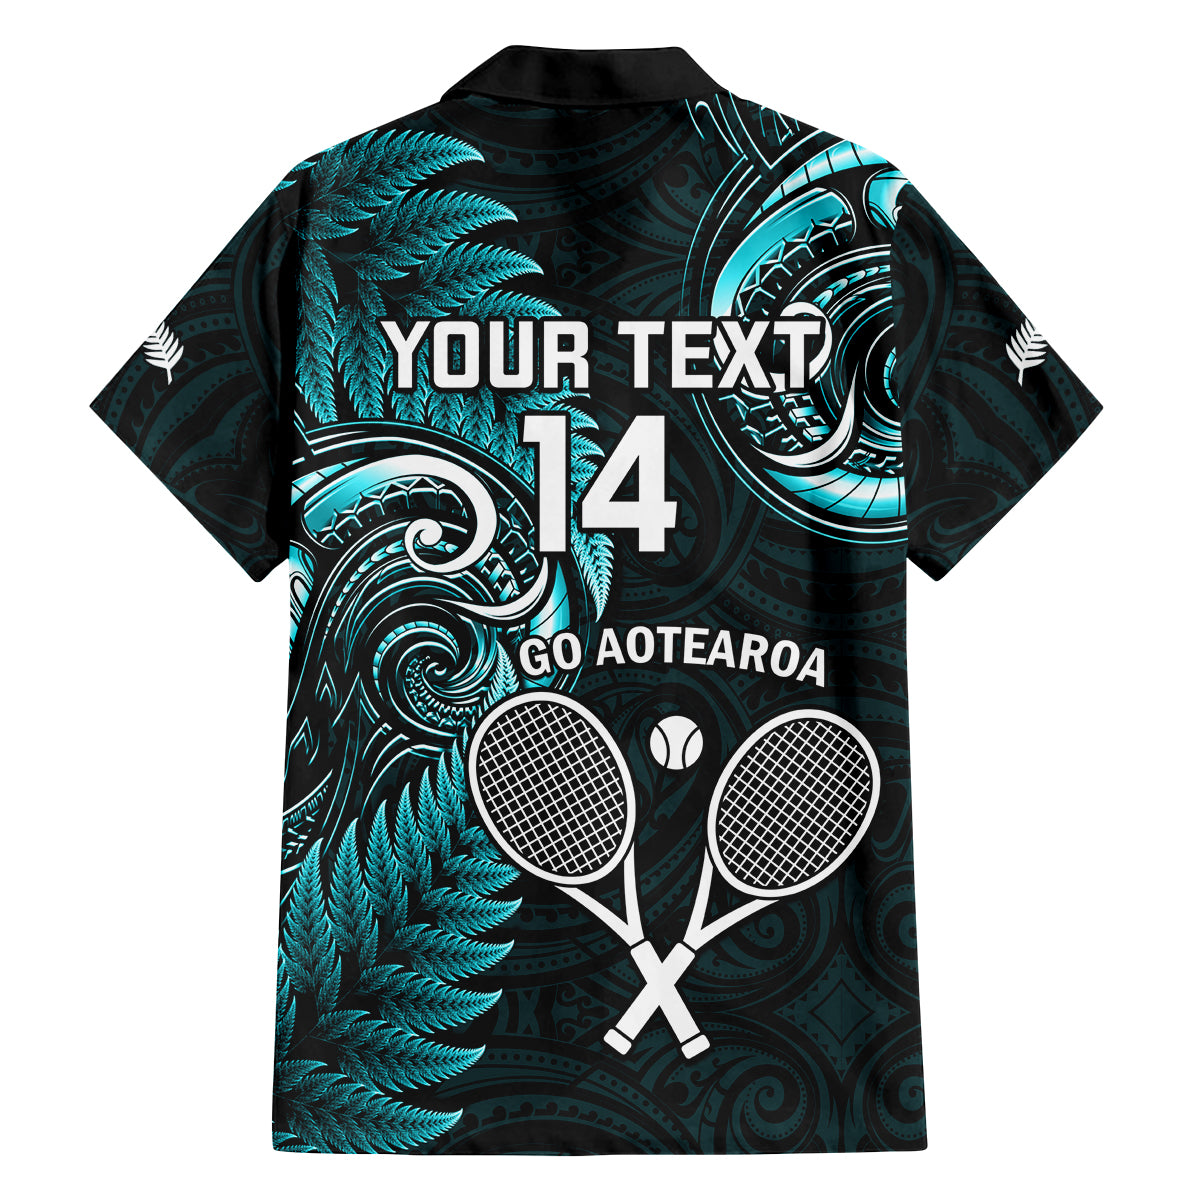 Custom New Zealand Tiki Tennis Family Matching Tank Maxi Dress and Hawaiian Shirt 2024 Aotearoa Tenehi Maori Silver Fern - Turquoise